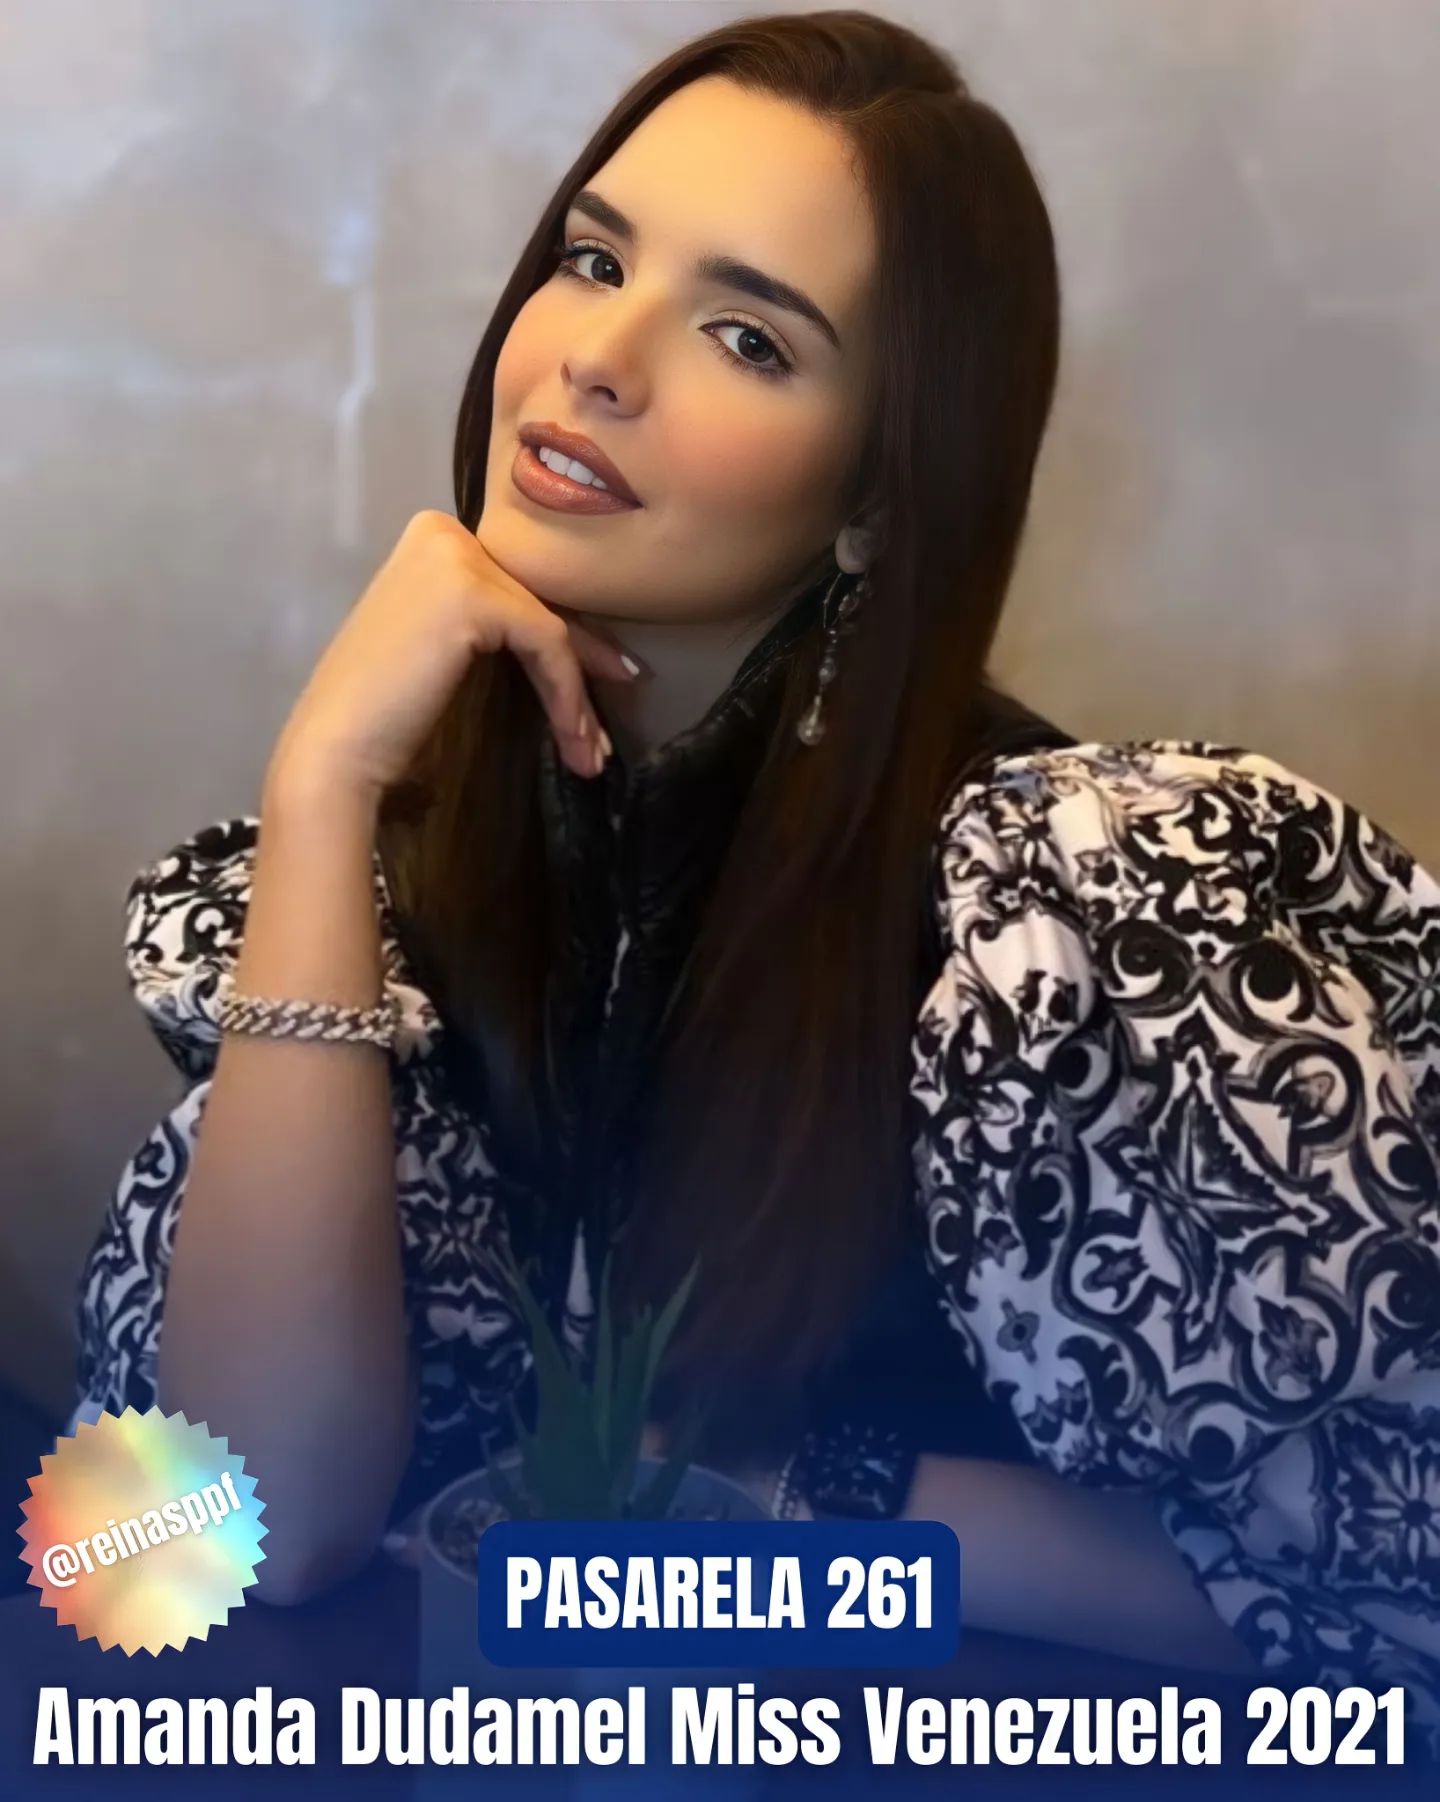 MissVenezuela2021 - amanda dudamel newman, 1st runner-up de miss universe 2022. - Página 14 32432312